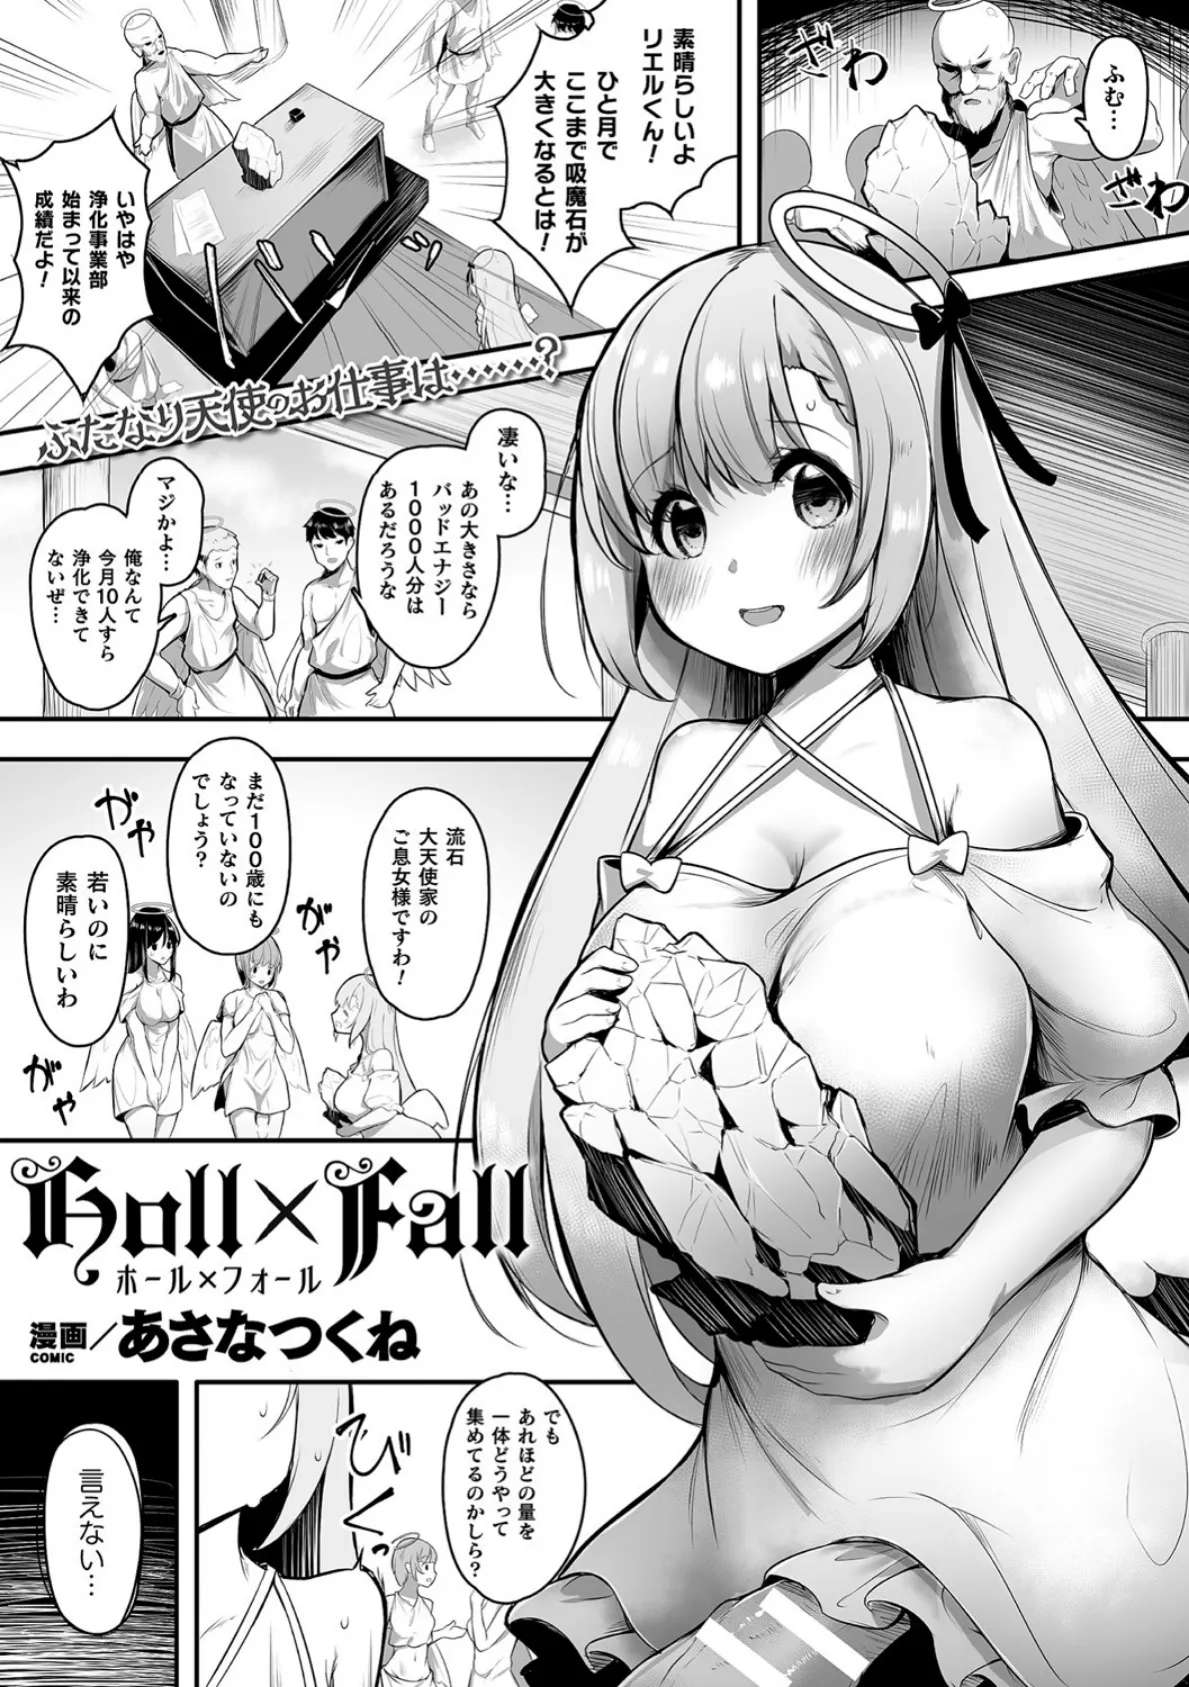 Holl×Fall【単話】 1ページ